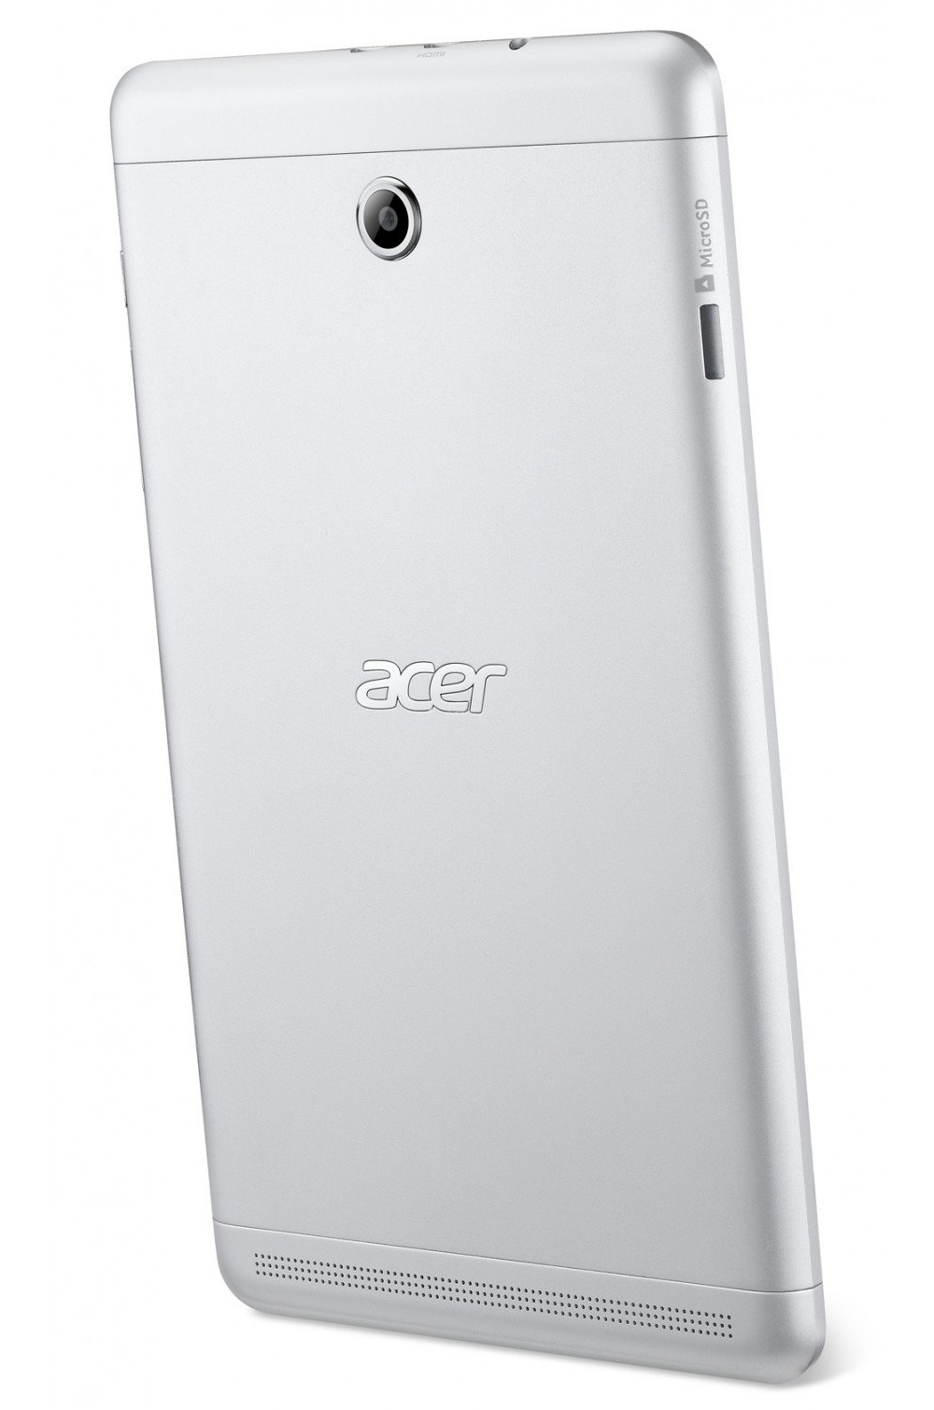 Acer ra mắt Iconia Tab 8 sử dụng chip Intel Atom 